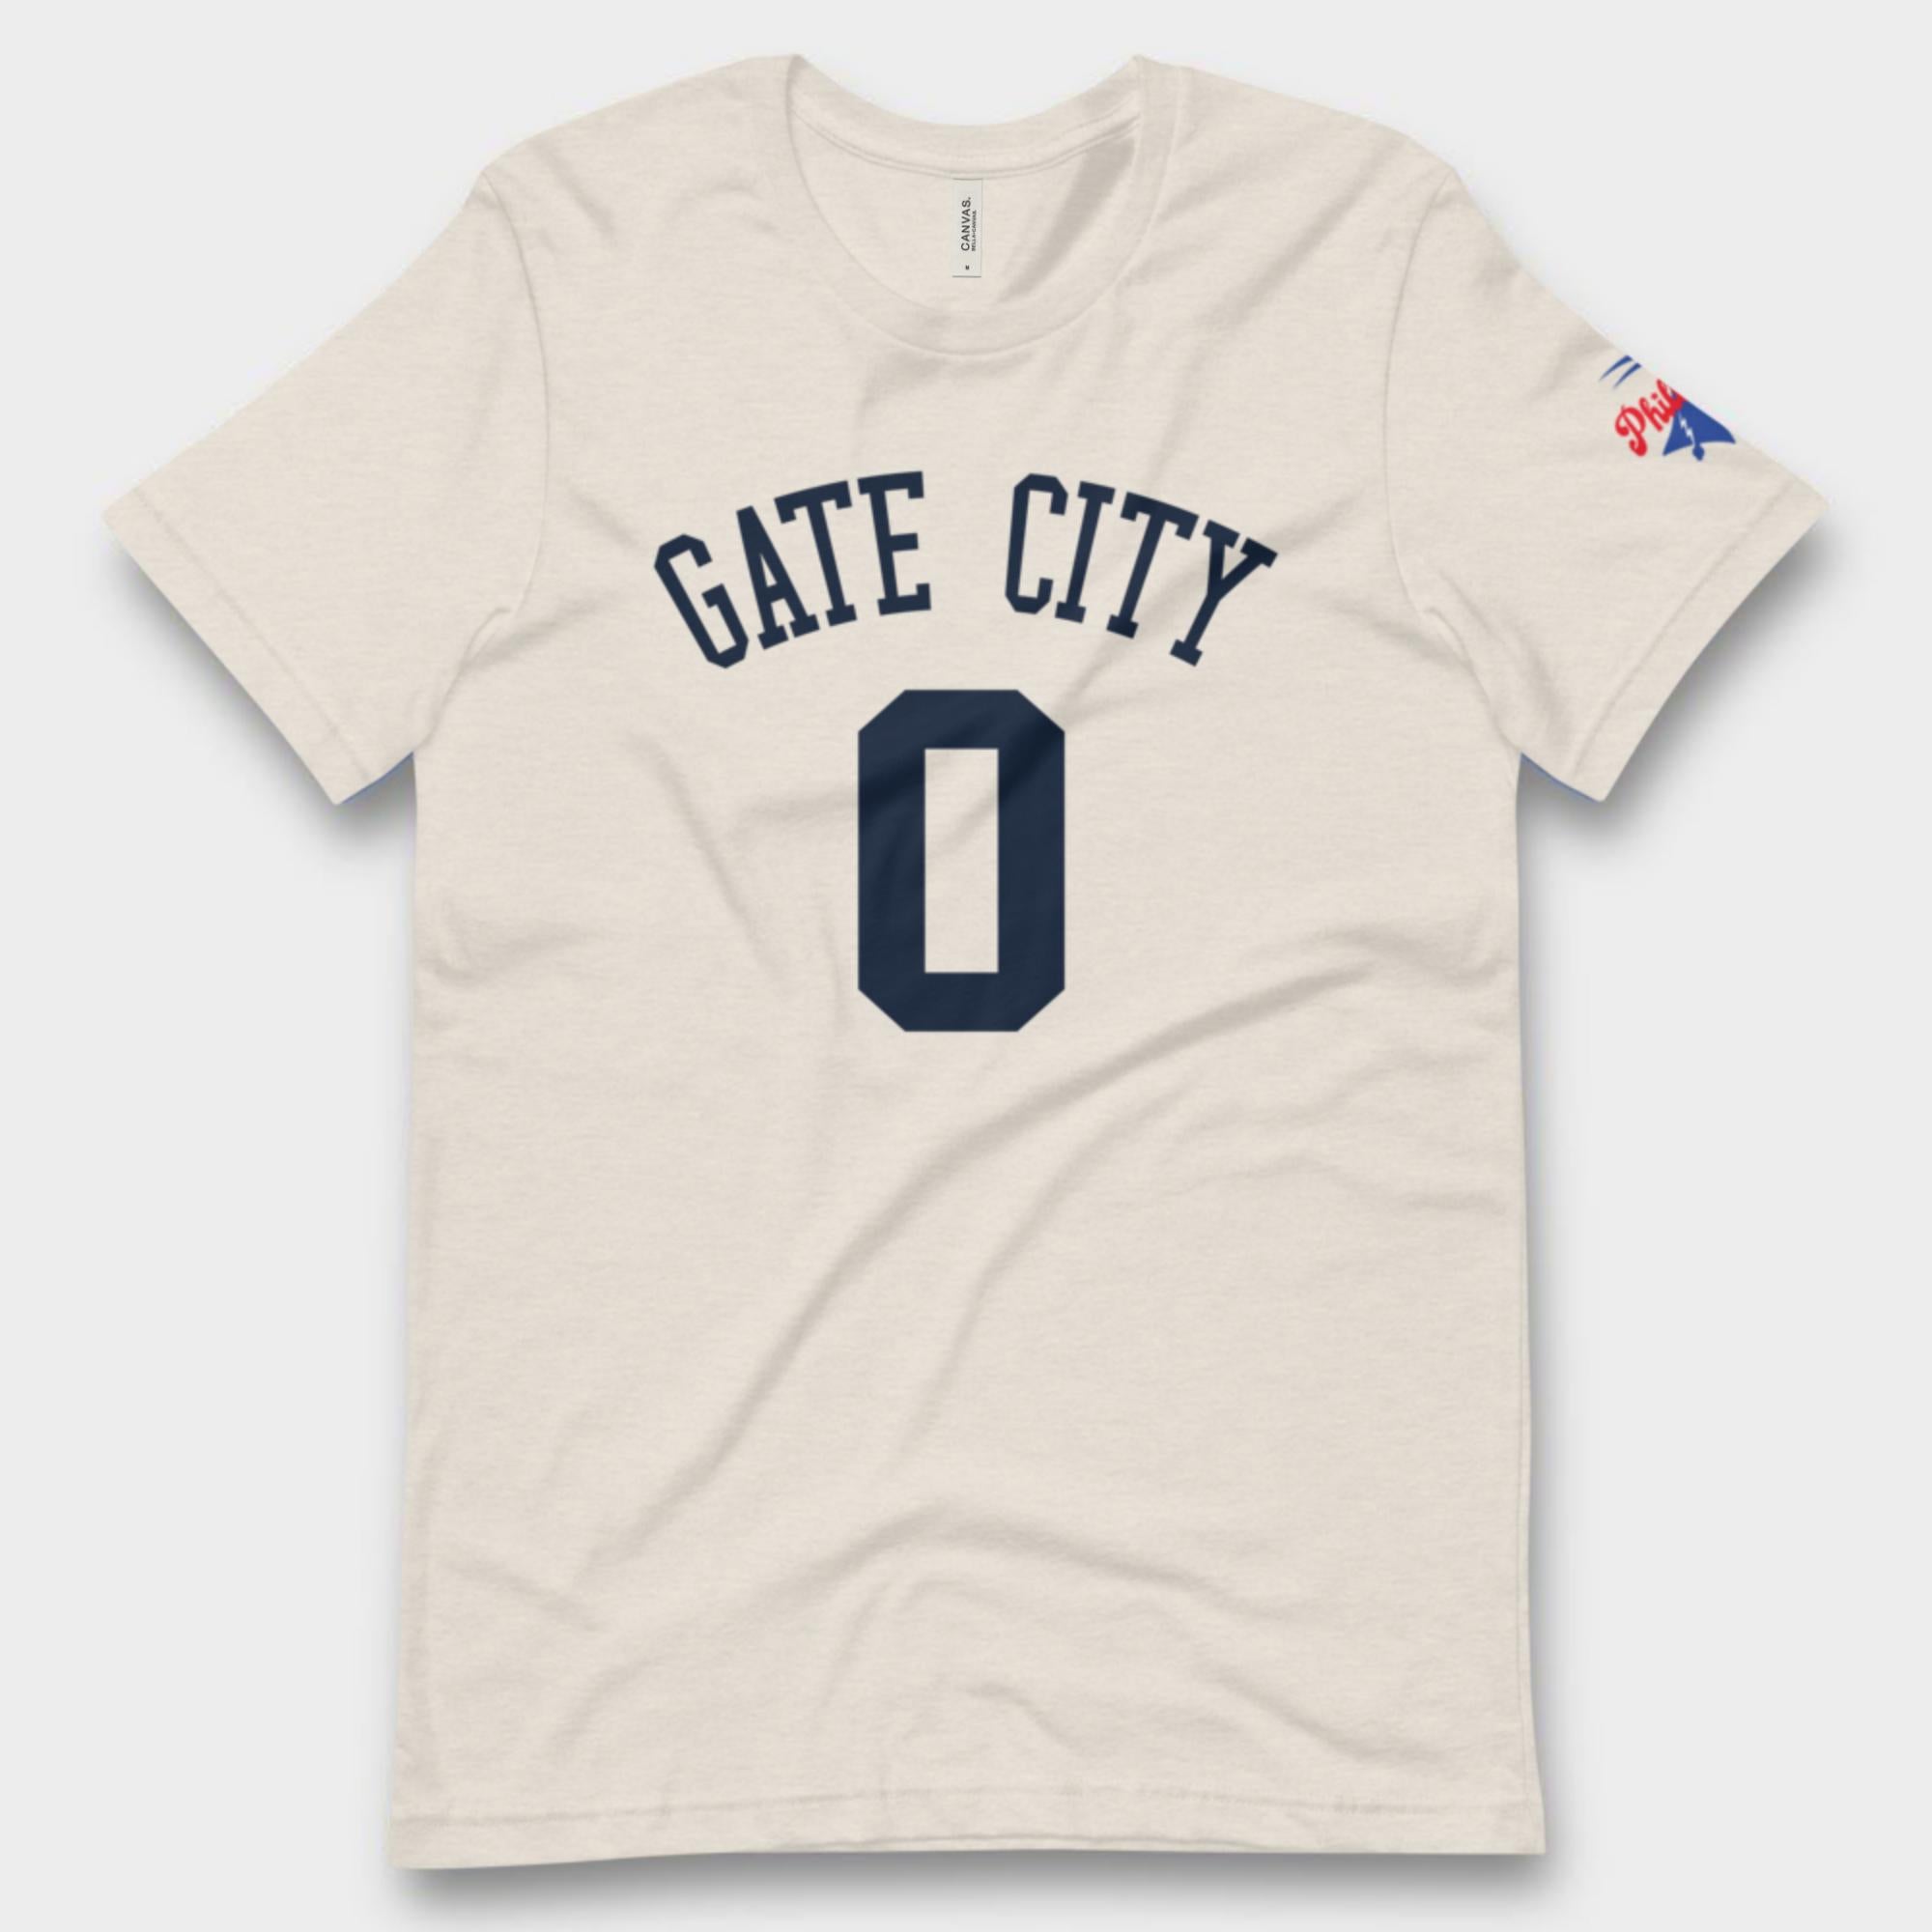 "Gate City" Tee